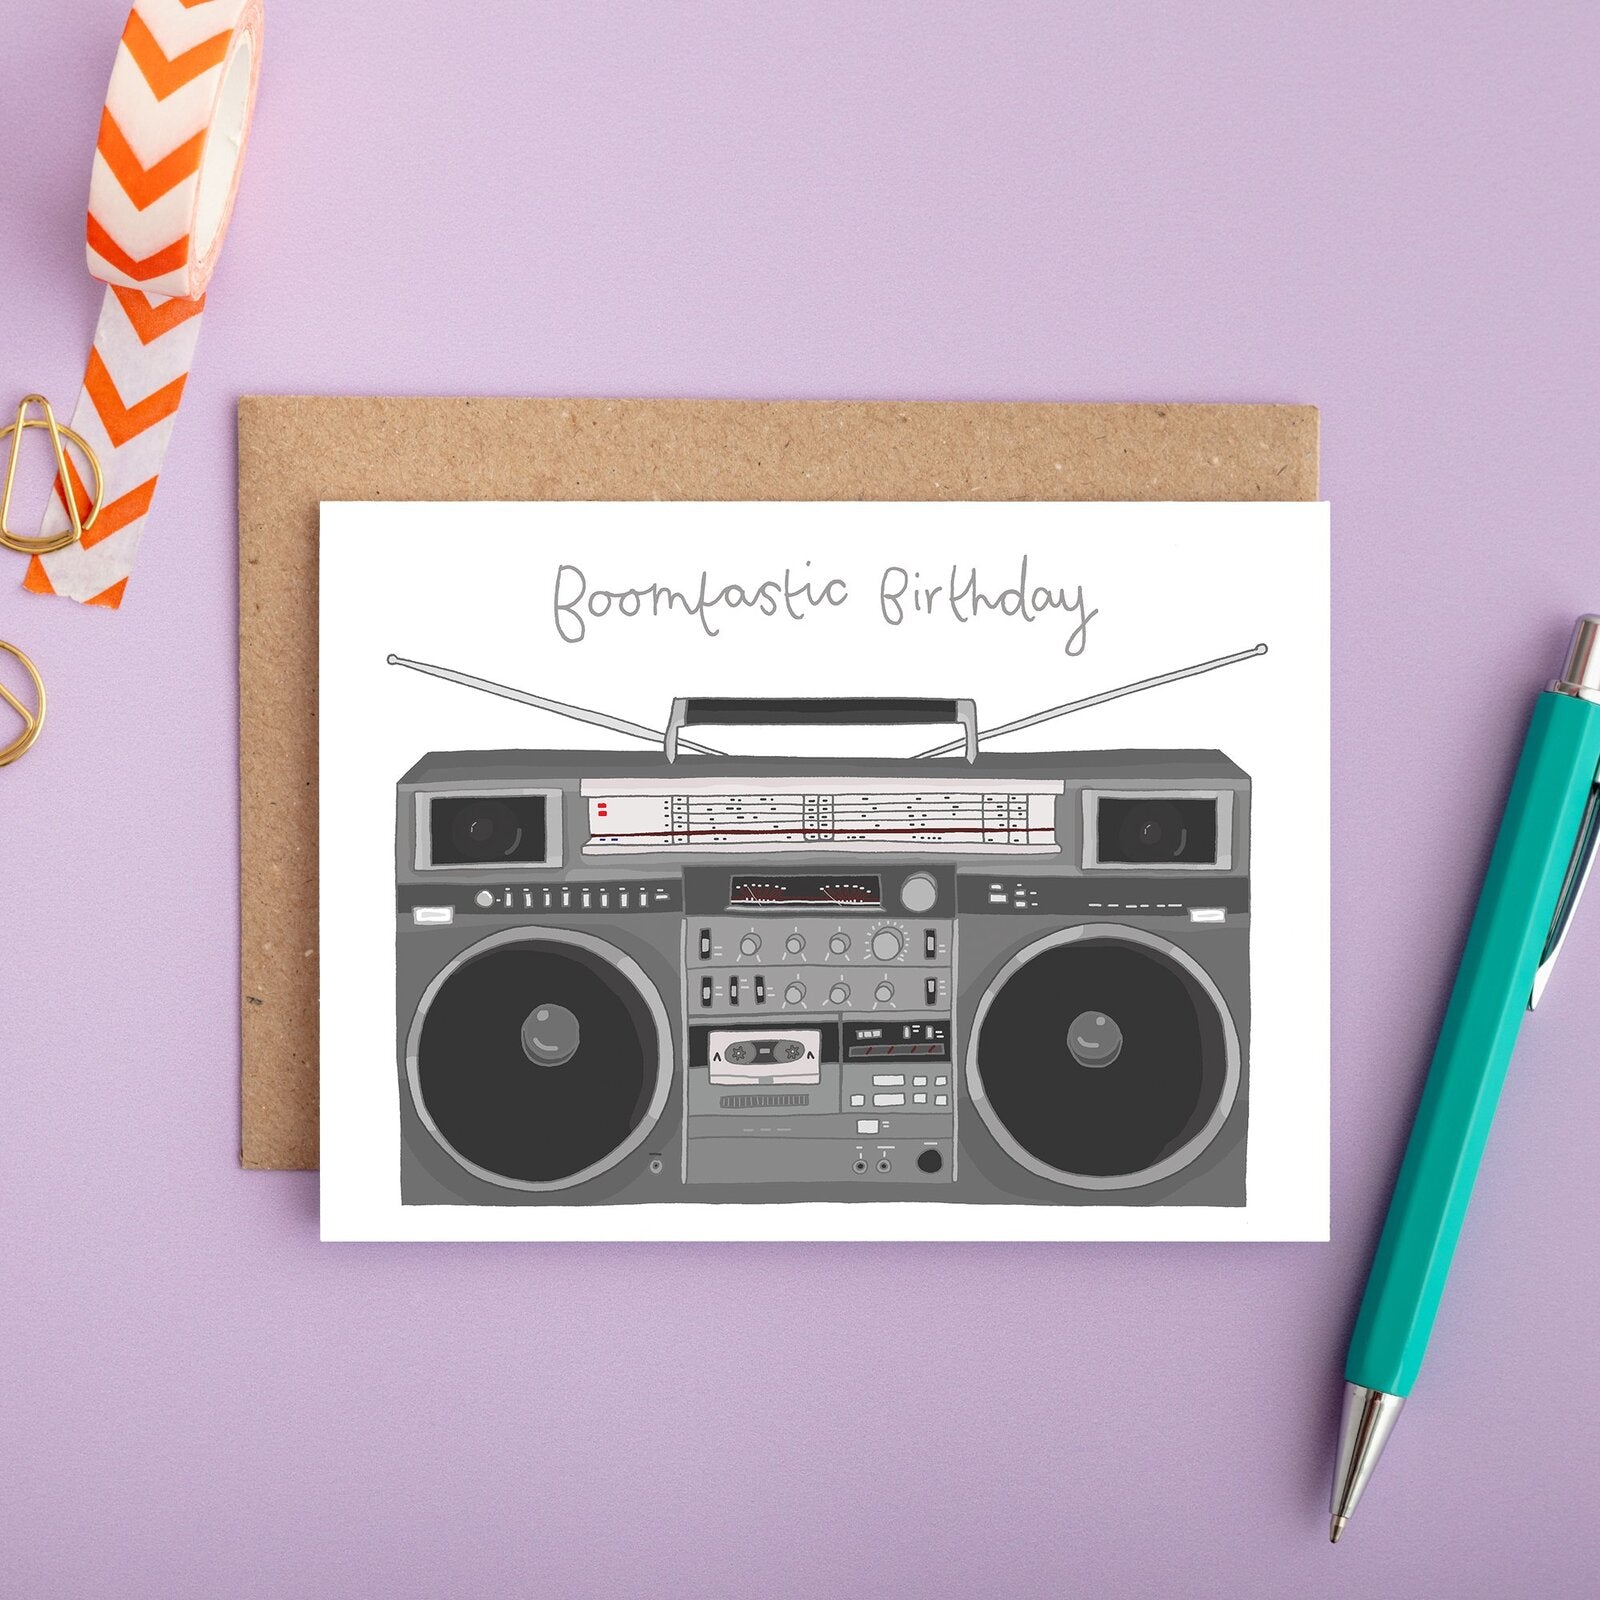 BOOMBOX - BOOMTASTIC BIRTHDAY Greeting Card